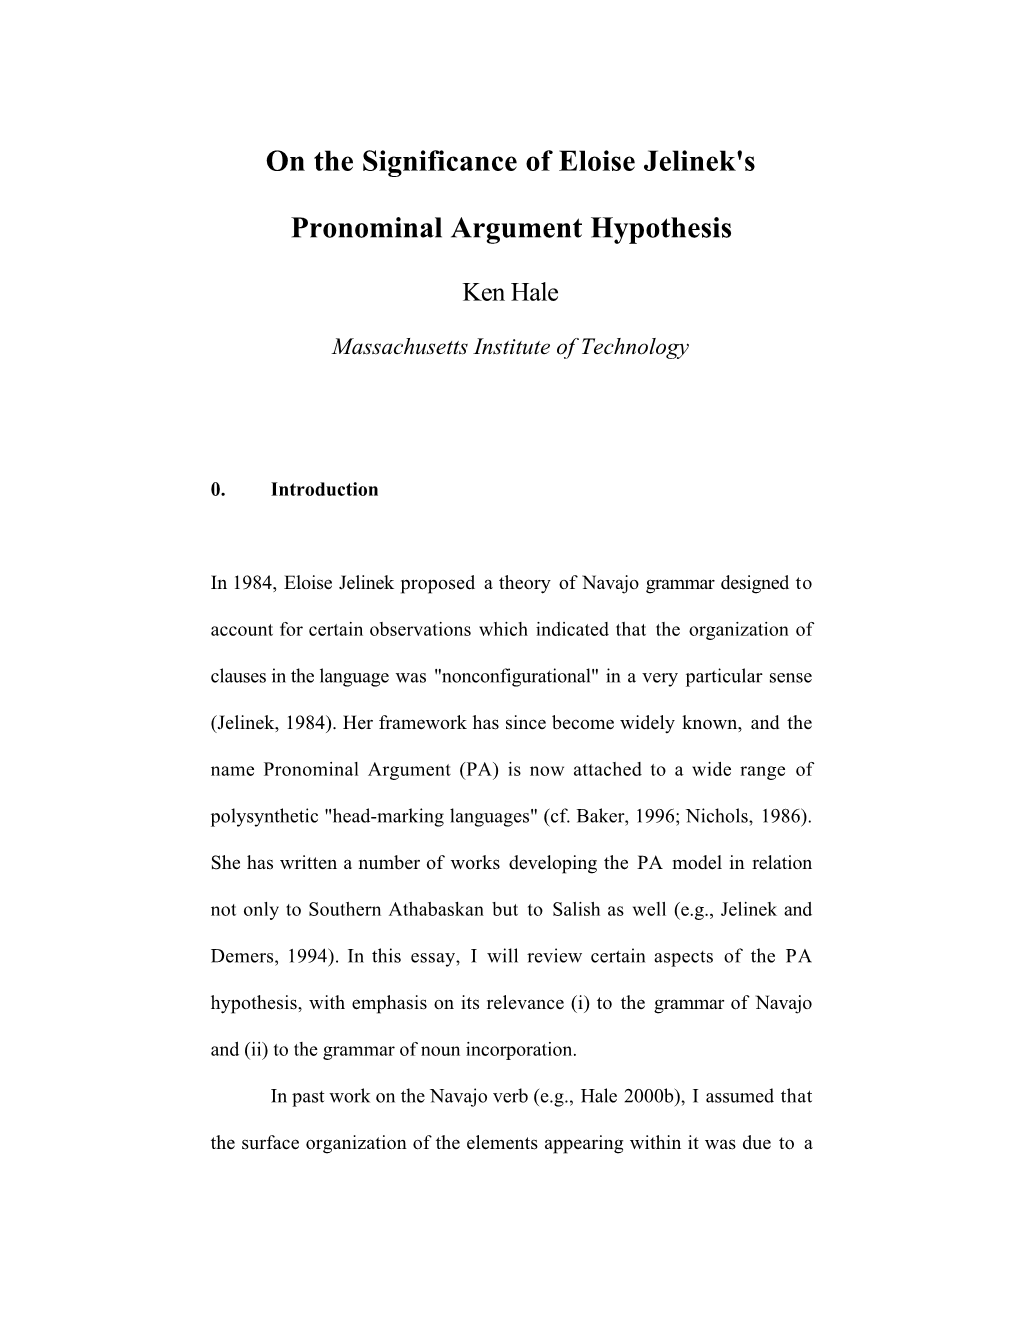 On the Significance of Eloise Jelinek's Pronominal Argument Hypothesis